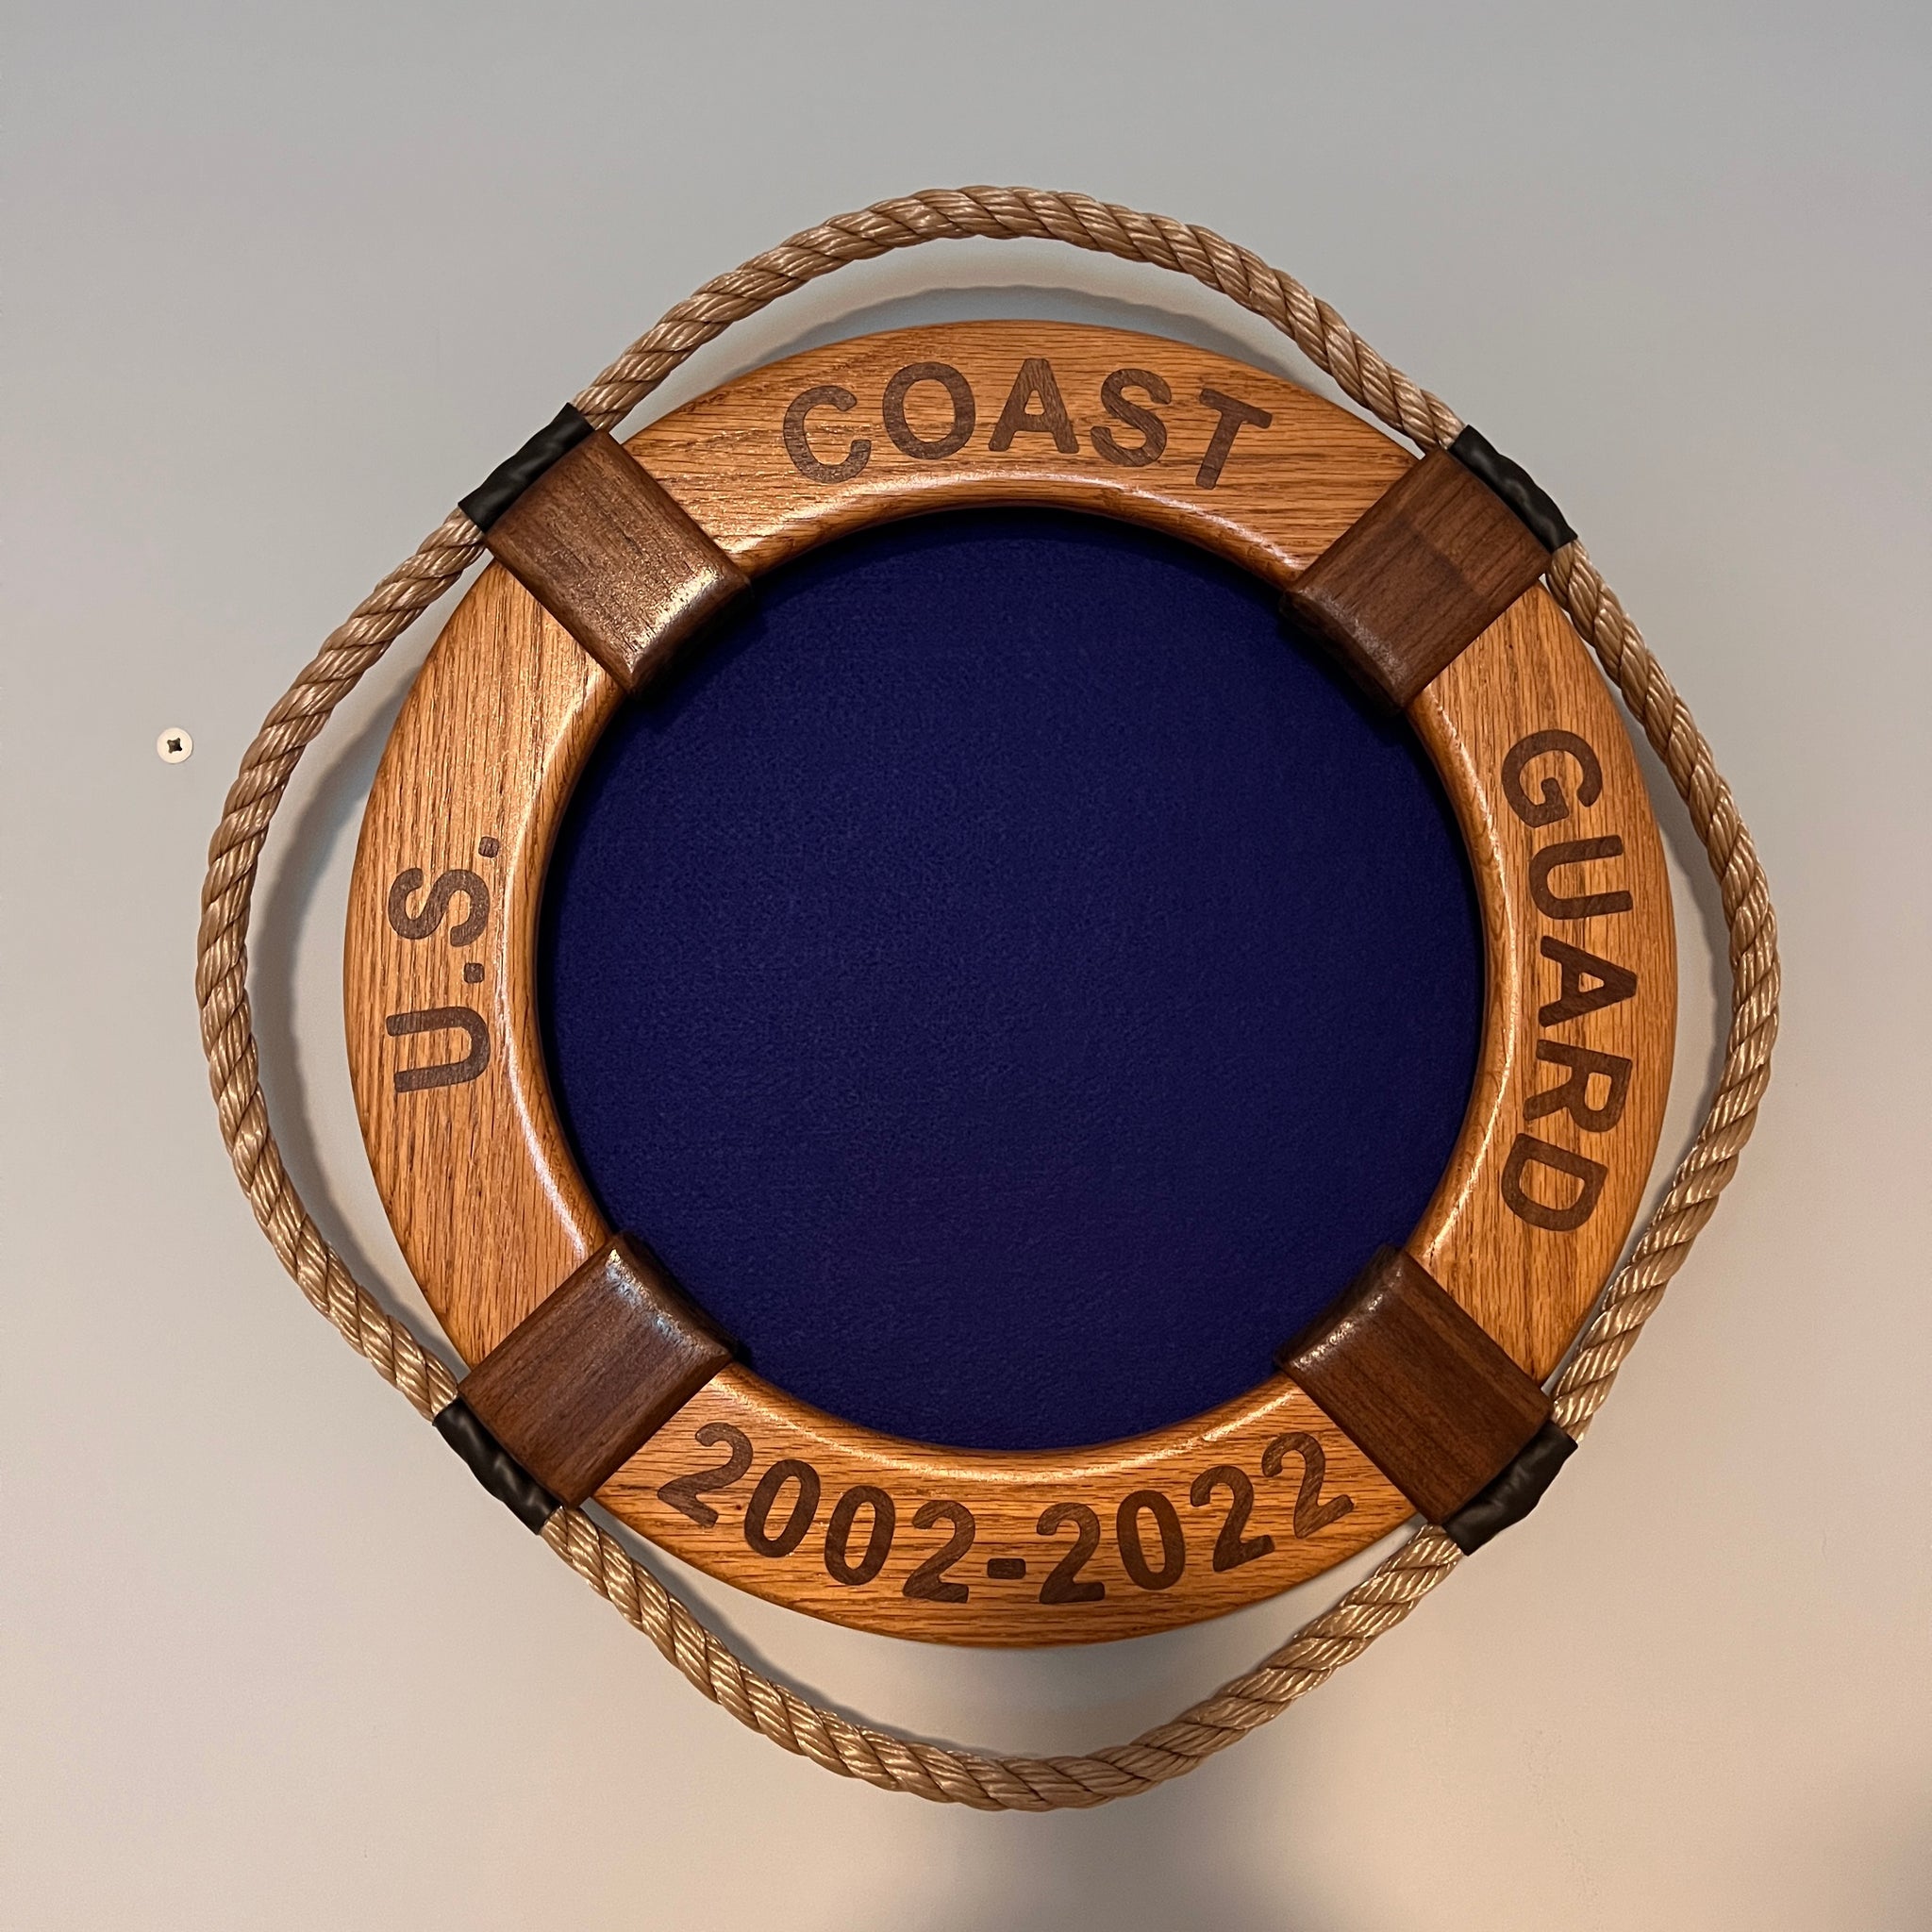 Coastguard Ring | Timepieces International